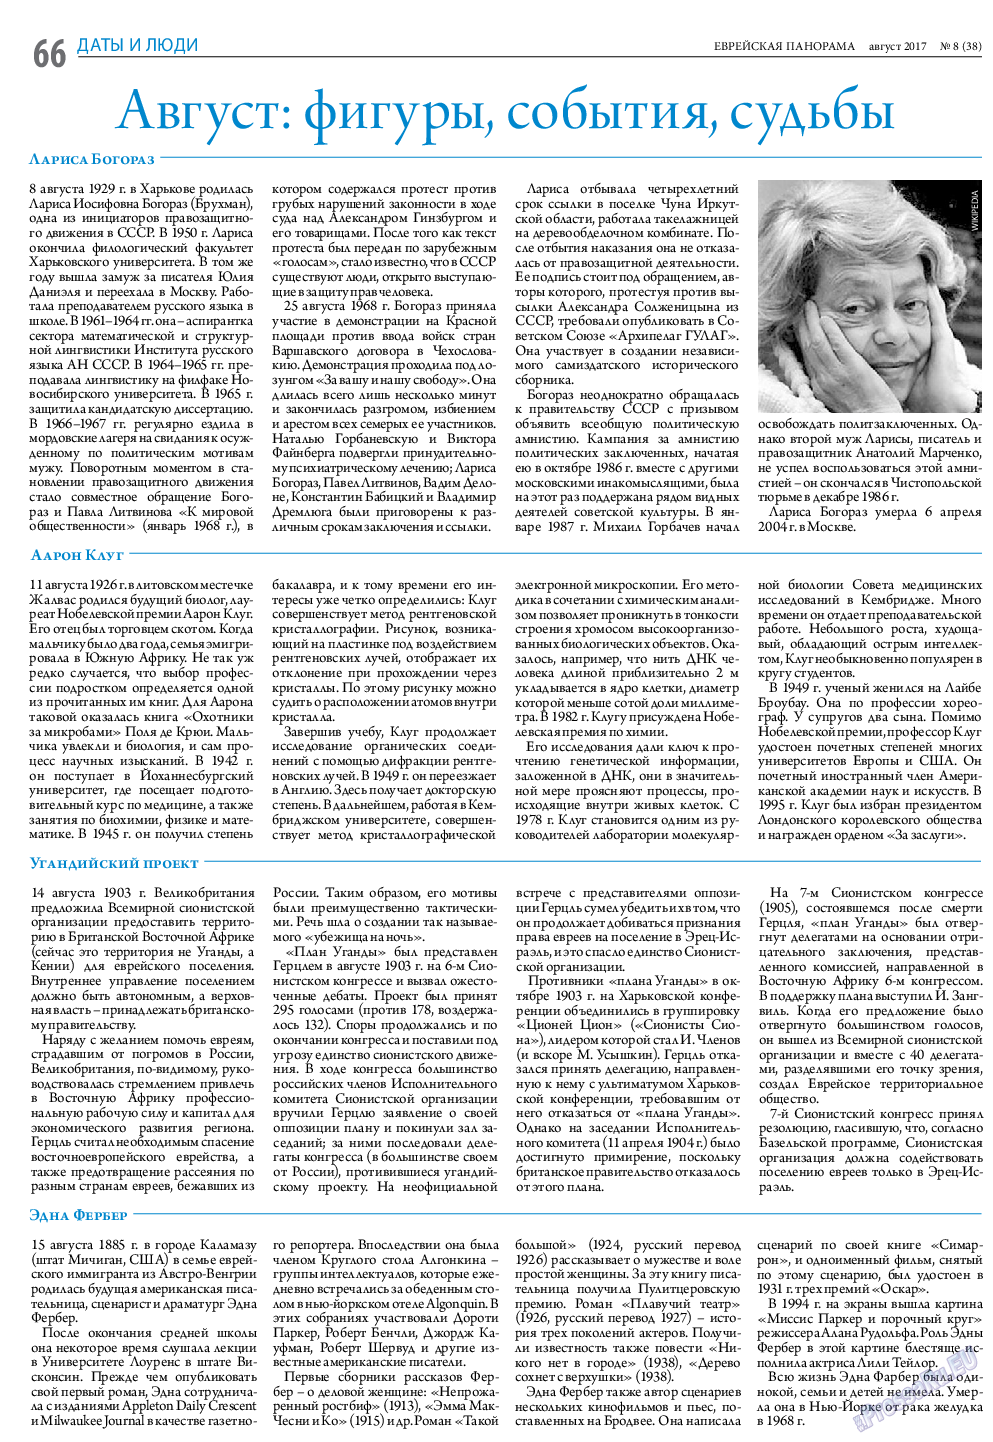 Еврейская панорама, газета. 2017 №8 стр.66